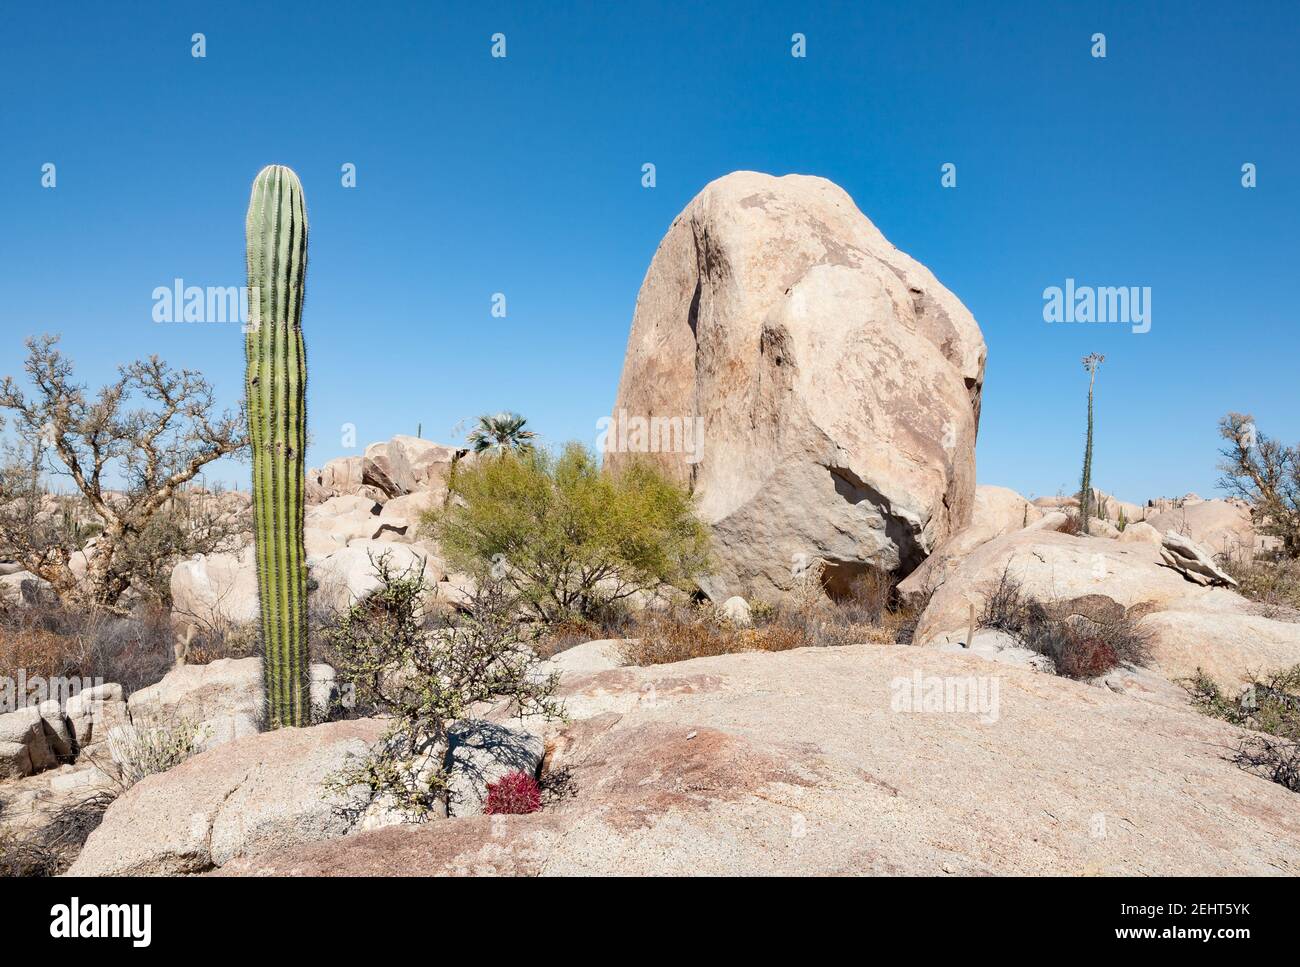 Cardon cactus, elephant tree, cirio boojum tree, palm tree and fire barrel cactus surround a rock, Baja California, Mexico Stock Photo